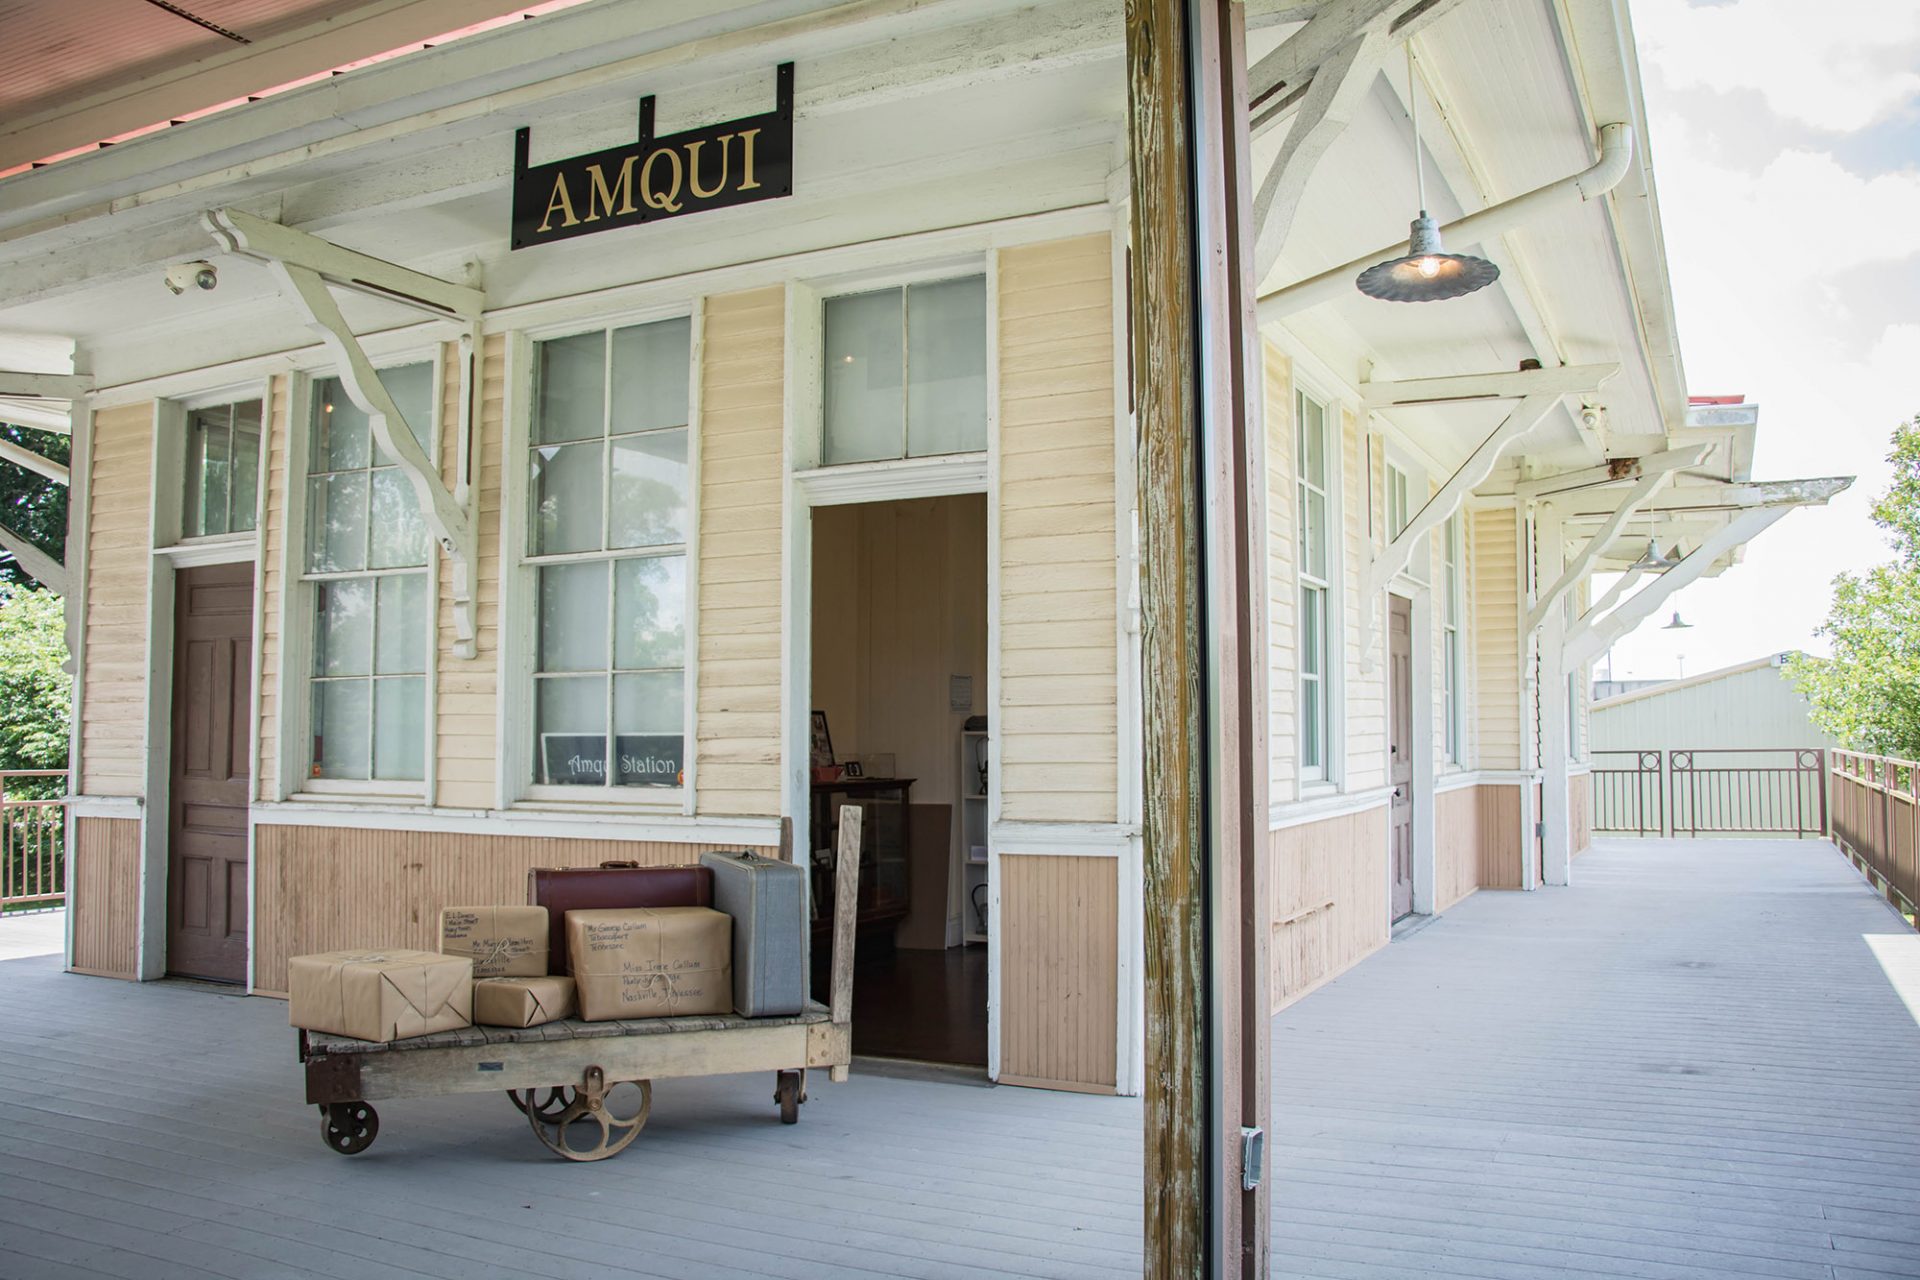 Historic Amqui Station Johnny Cash Museum